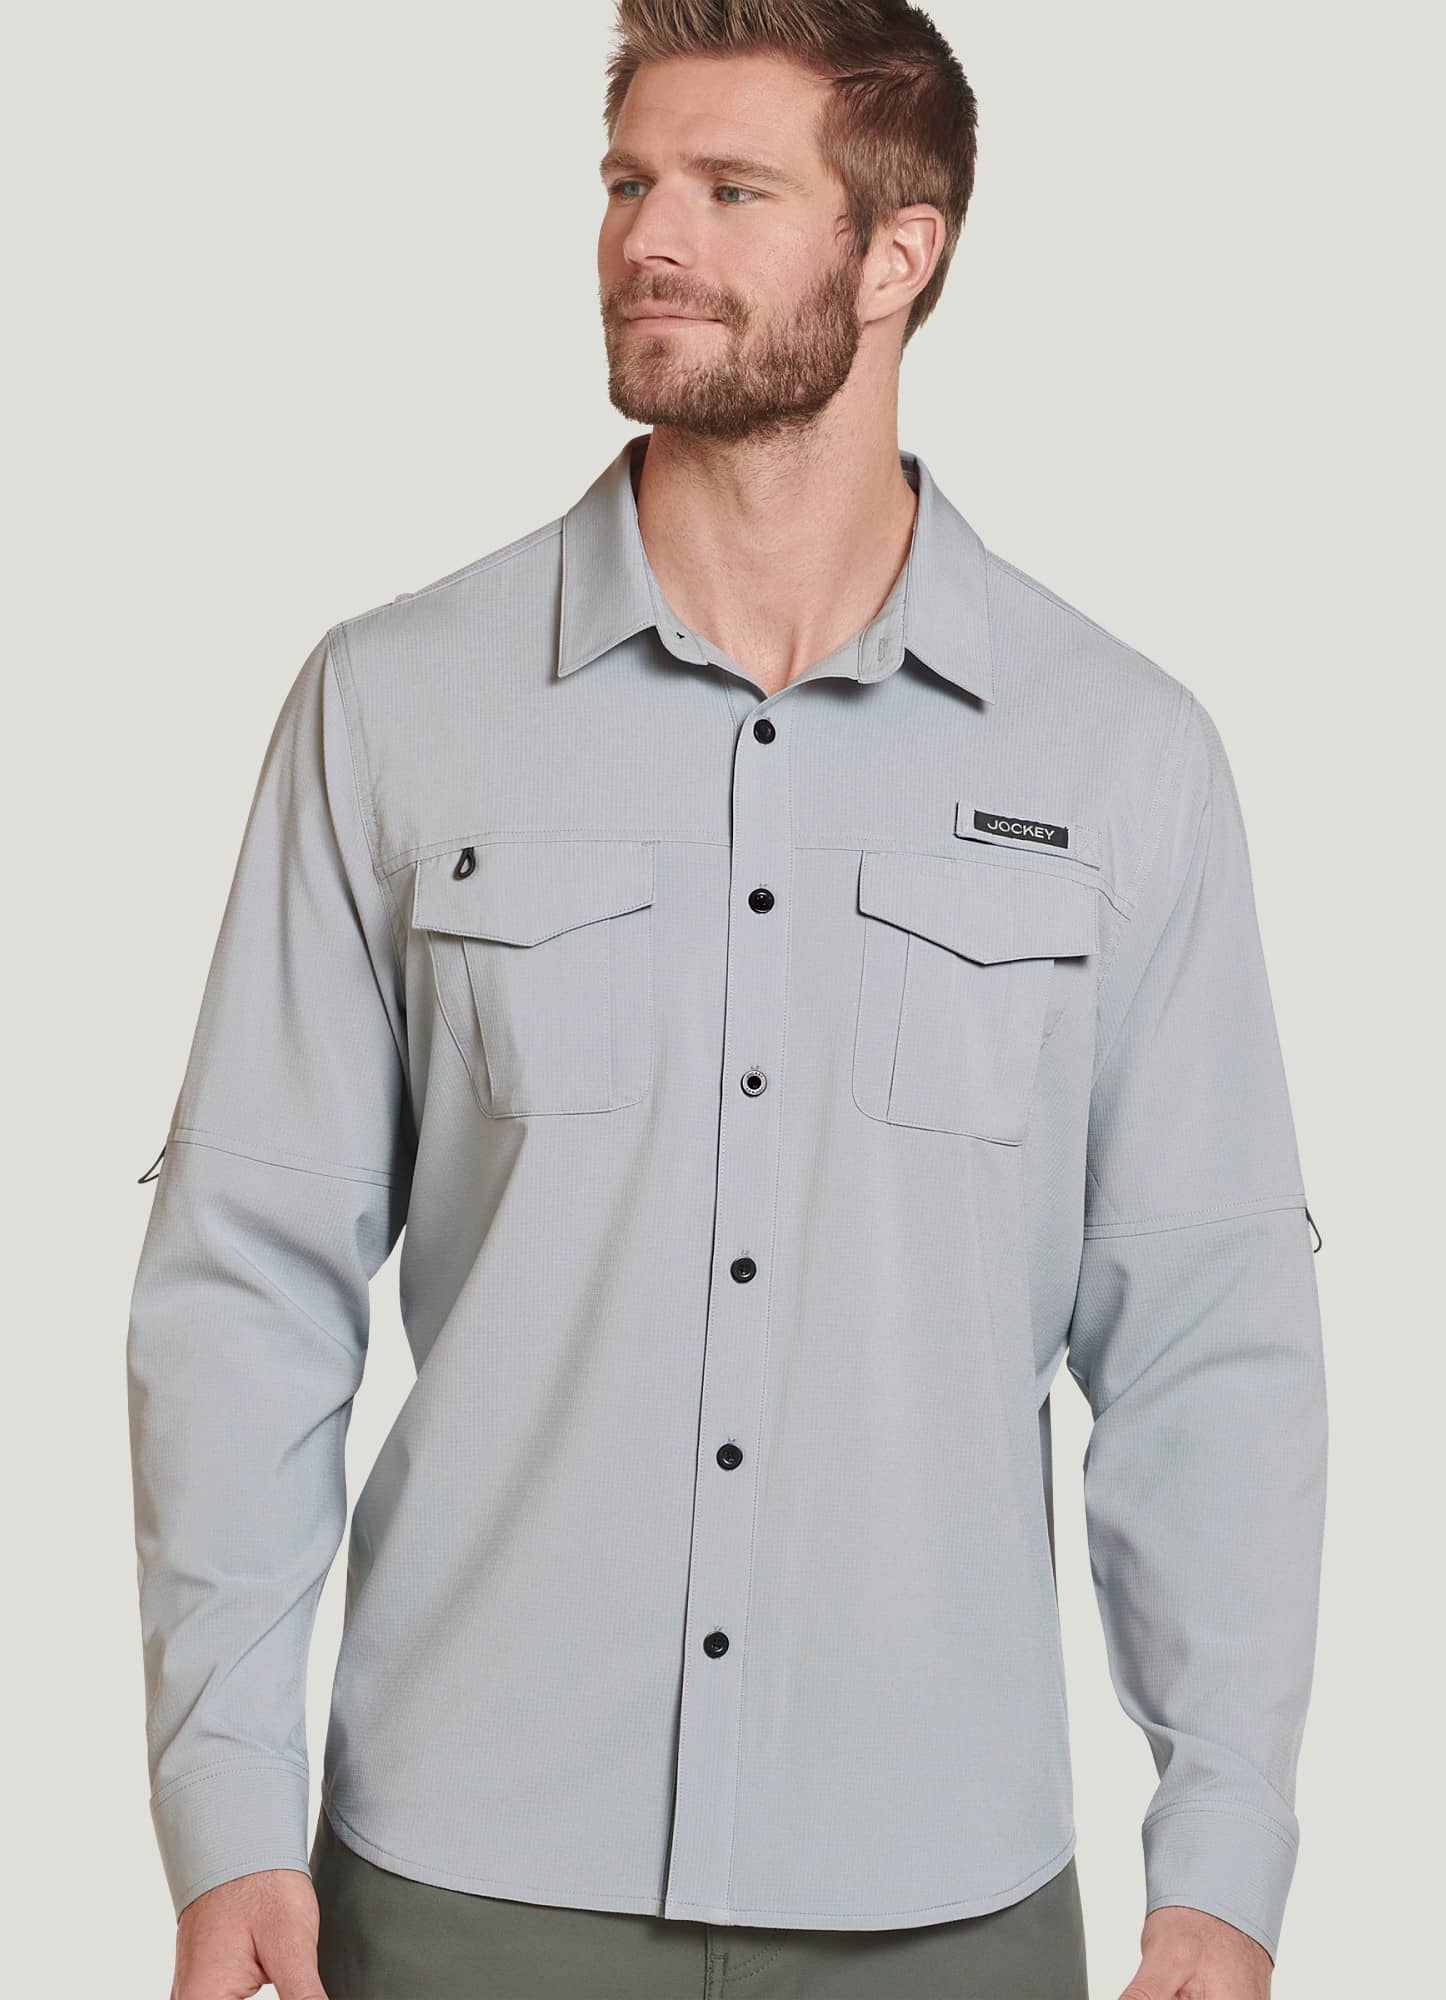 Jockey Men's Outdoors Long Sleeve Fishing Shirt L Grey Agate